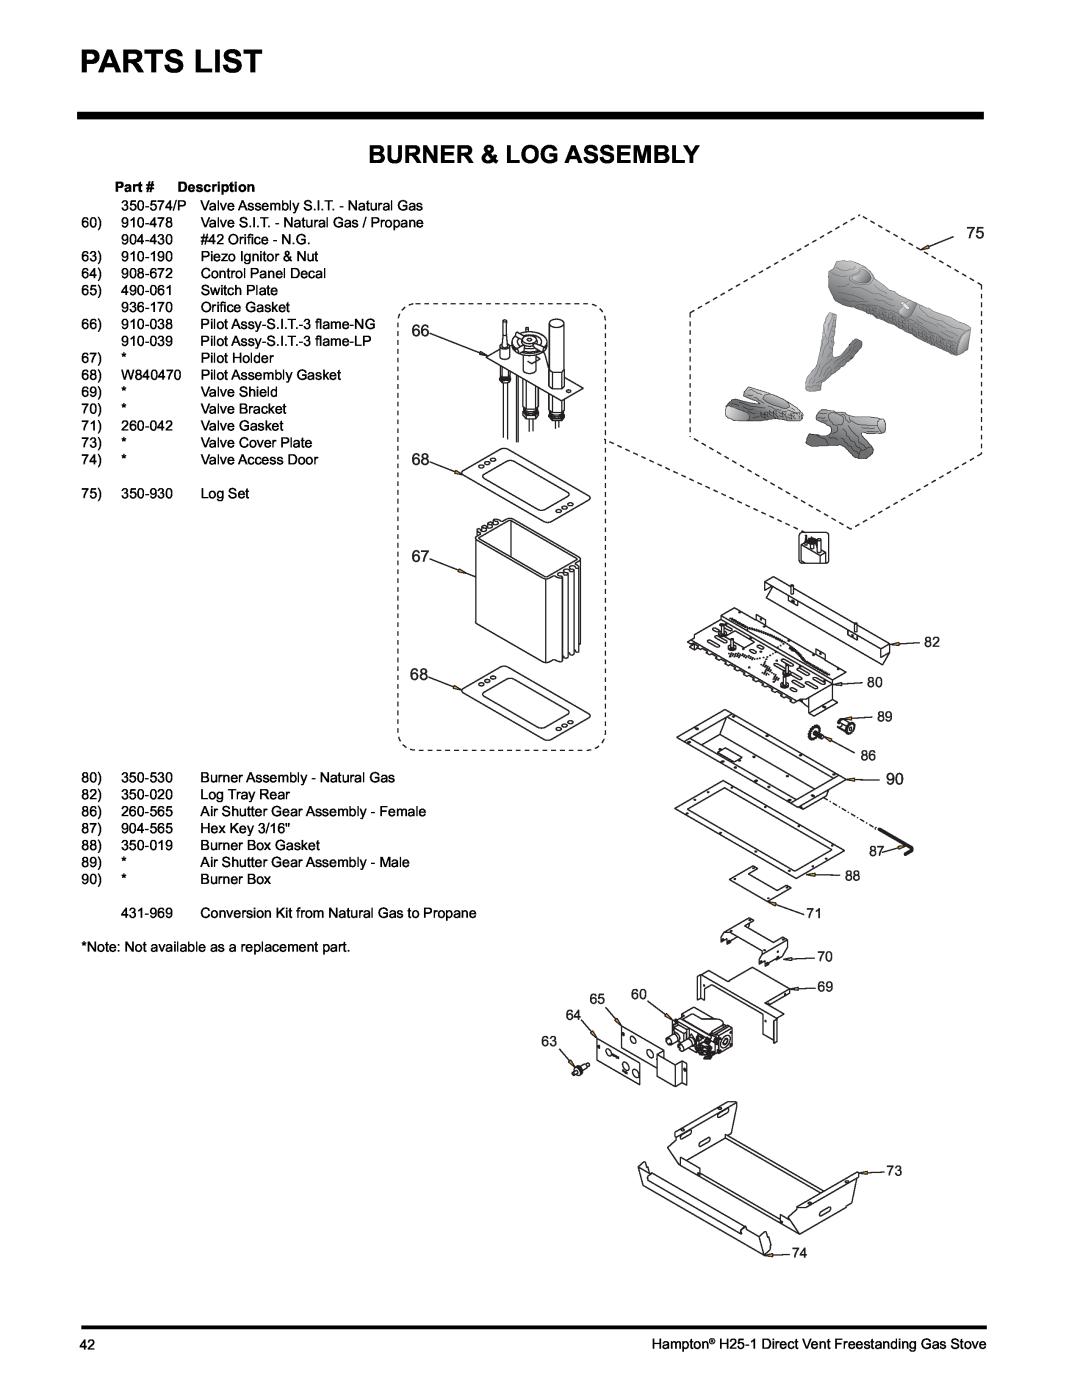 Hampton Direct H25-NG1, H25-LP1 installation manual Burner & Log Assembly, Parts List, Description 